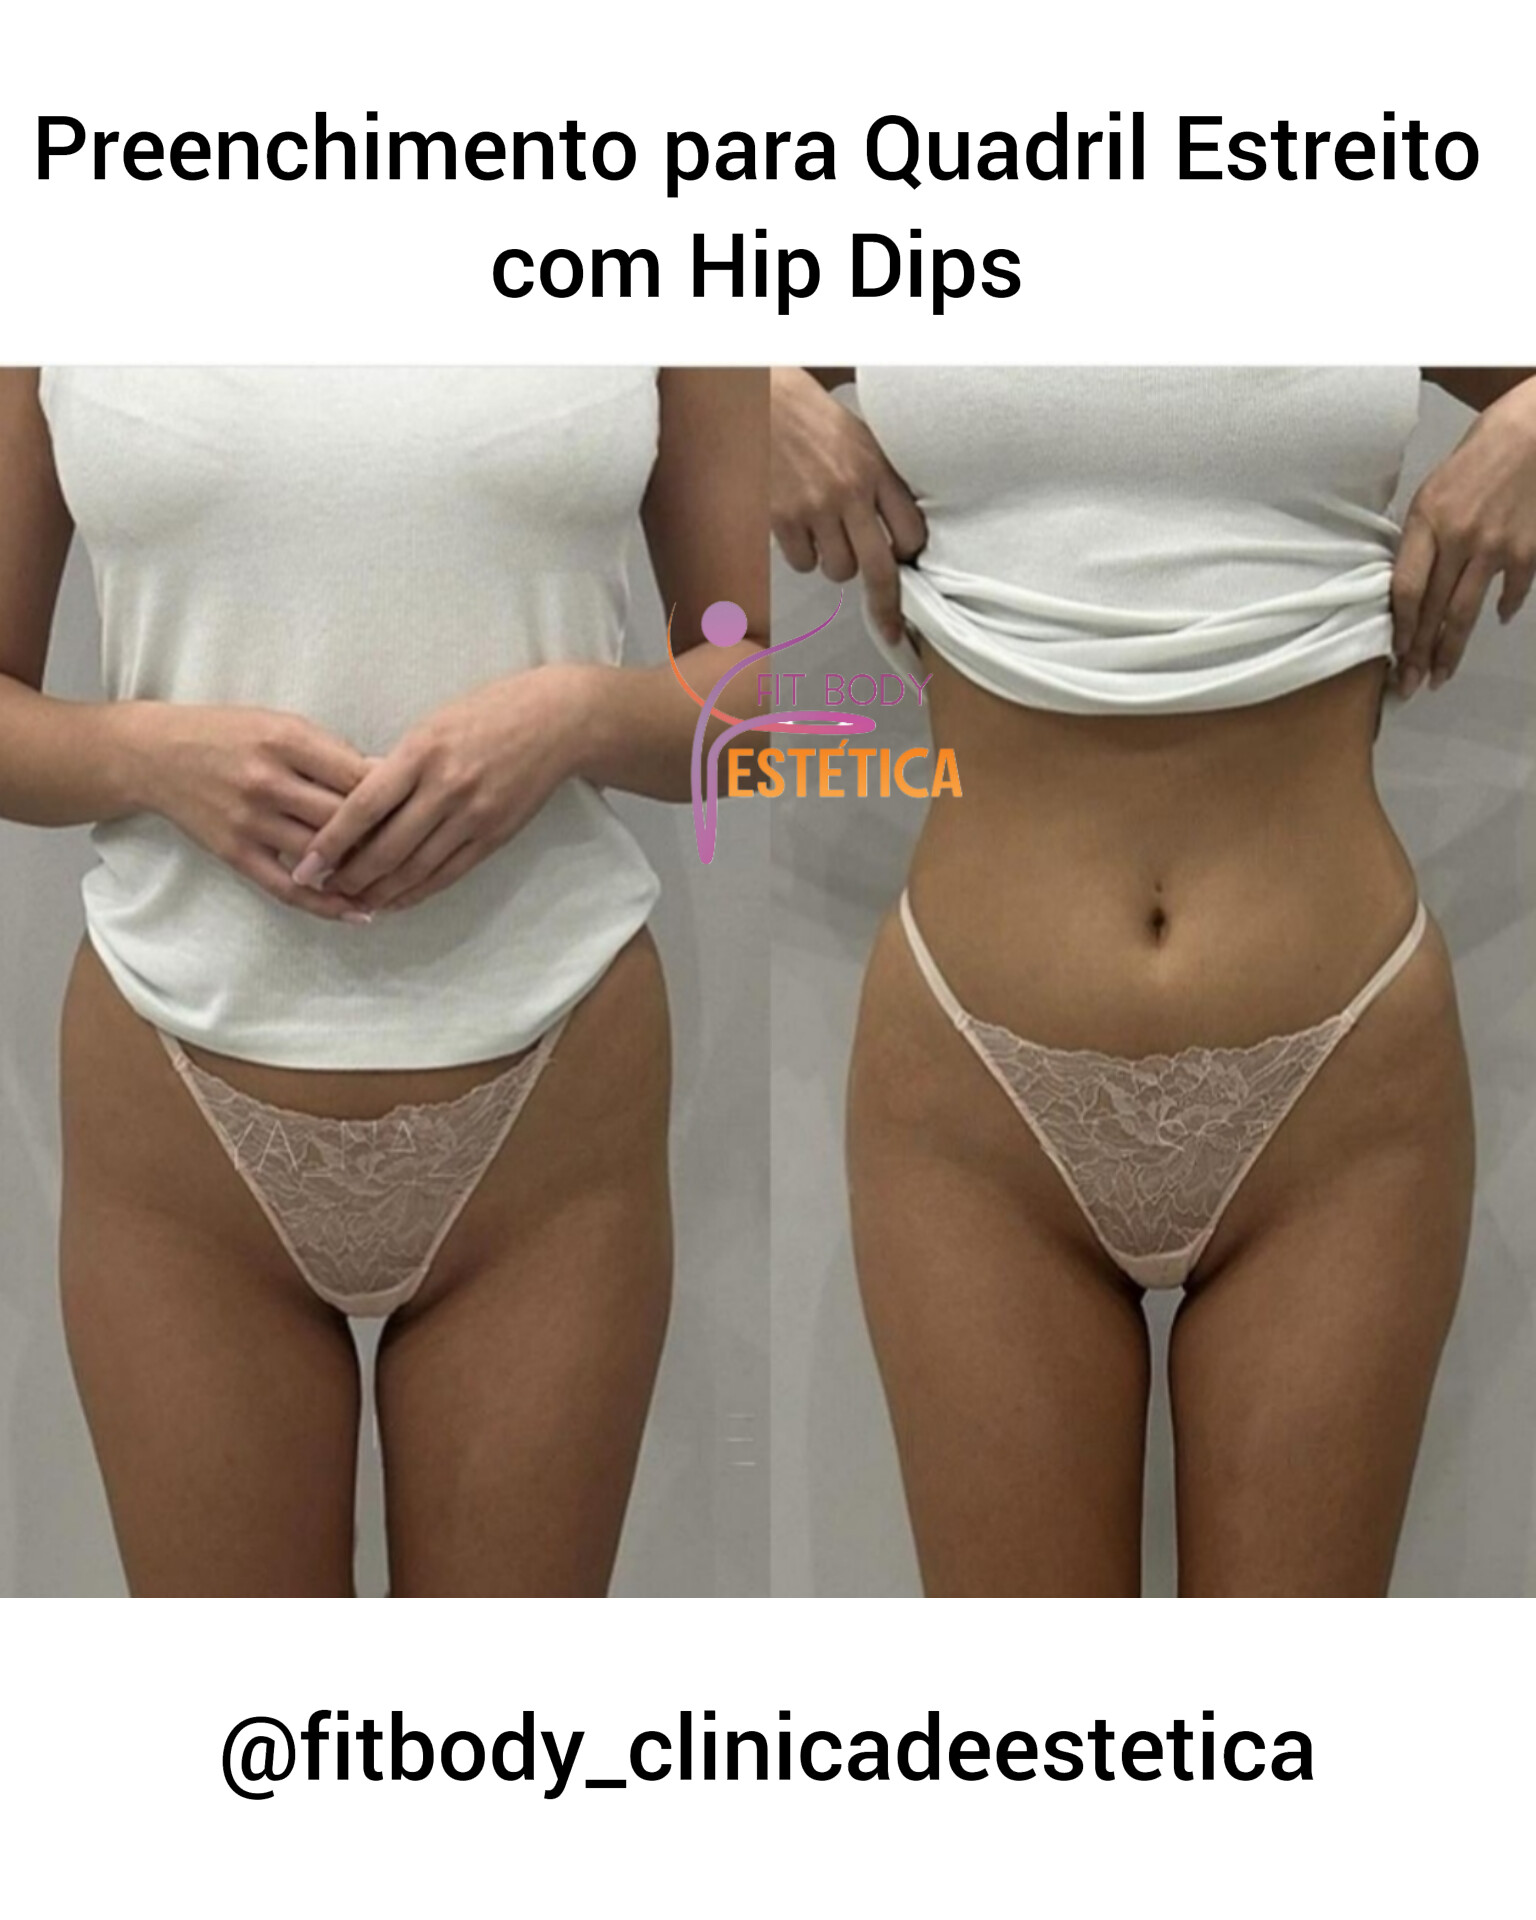 Arquivos preenchimento para hip dips - Clínica Fit Body Estética